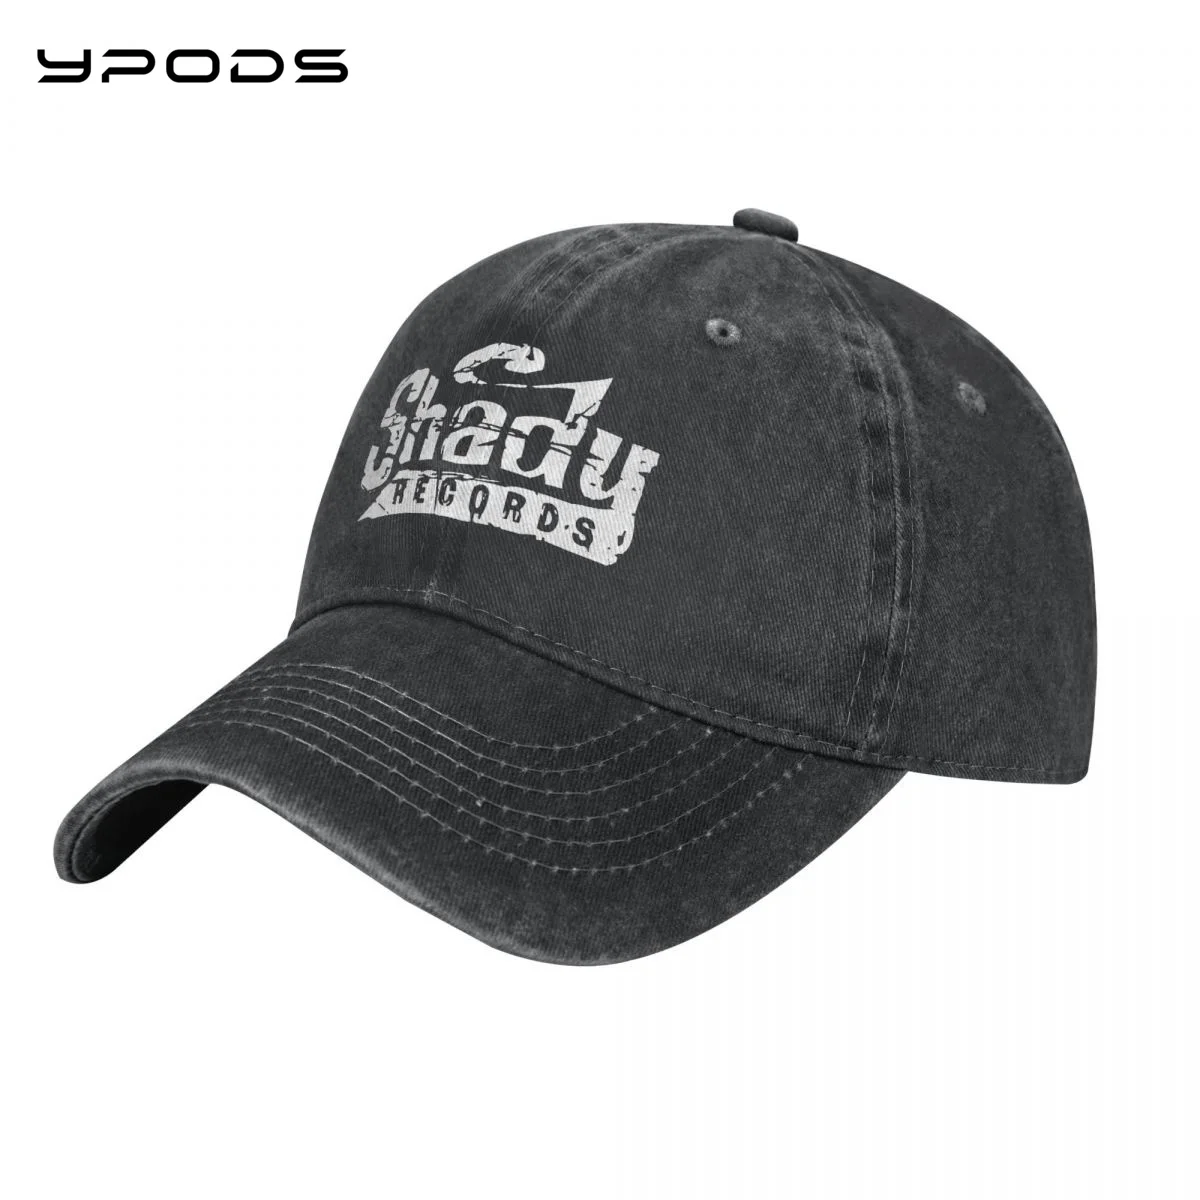 

Shady Records Baseball Cotton Cap Men Women Design Hat Trucker Snapback Dad Hats Cap